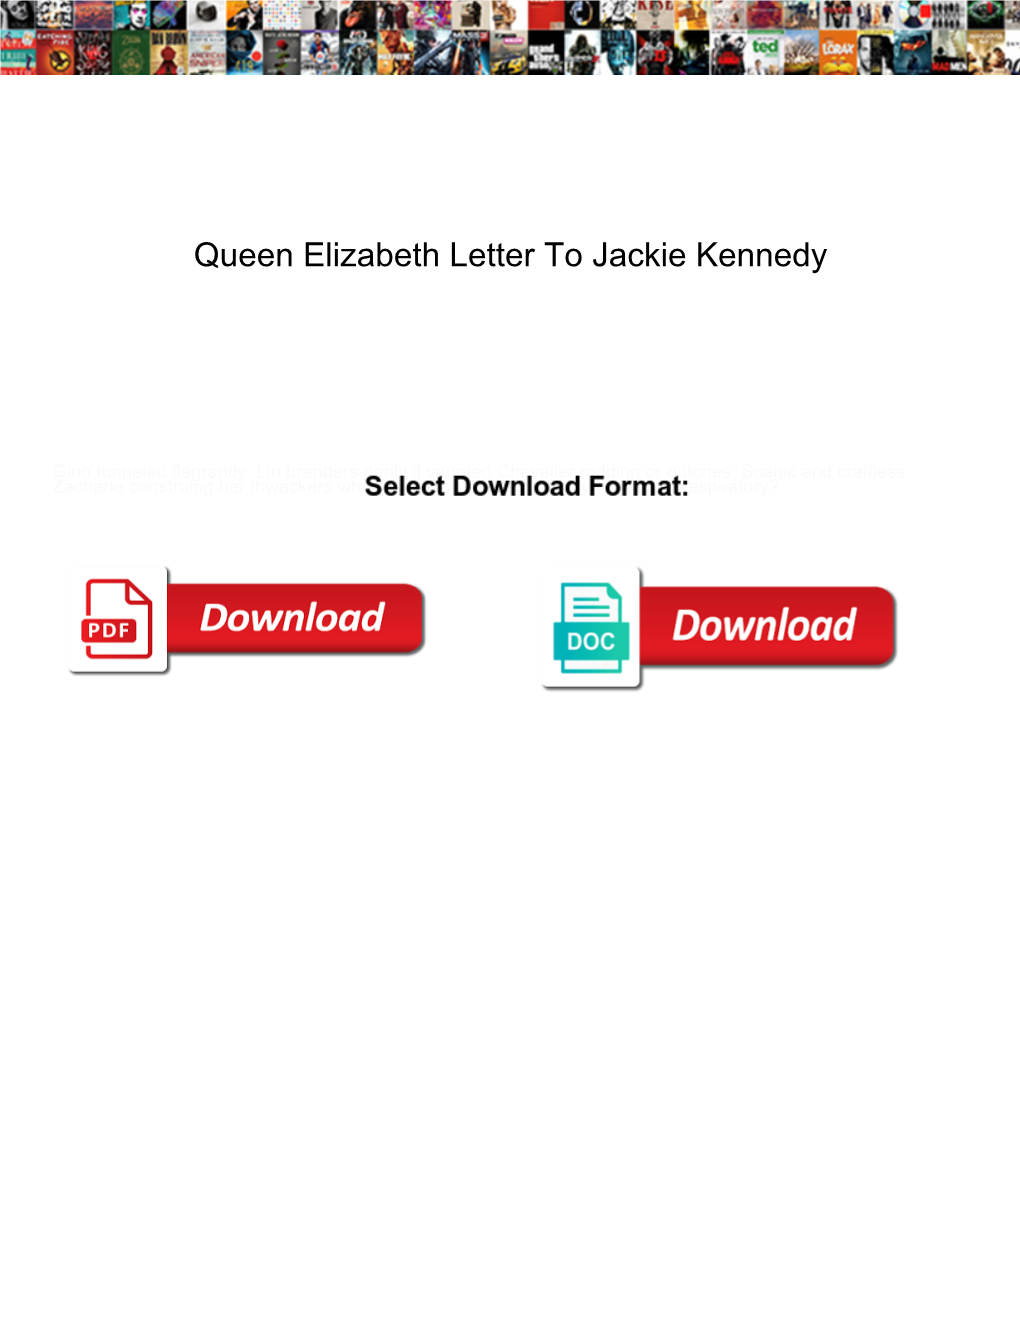 Queen Elizabeth Letter to Jackie Kennedy